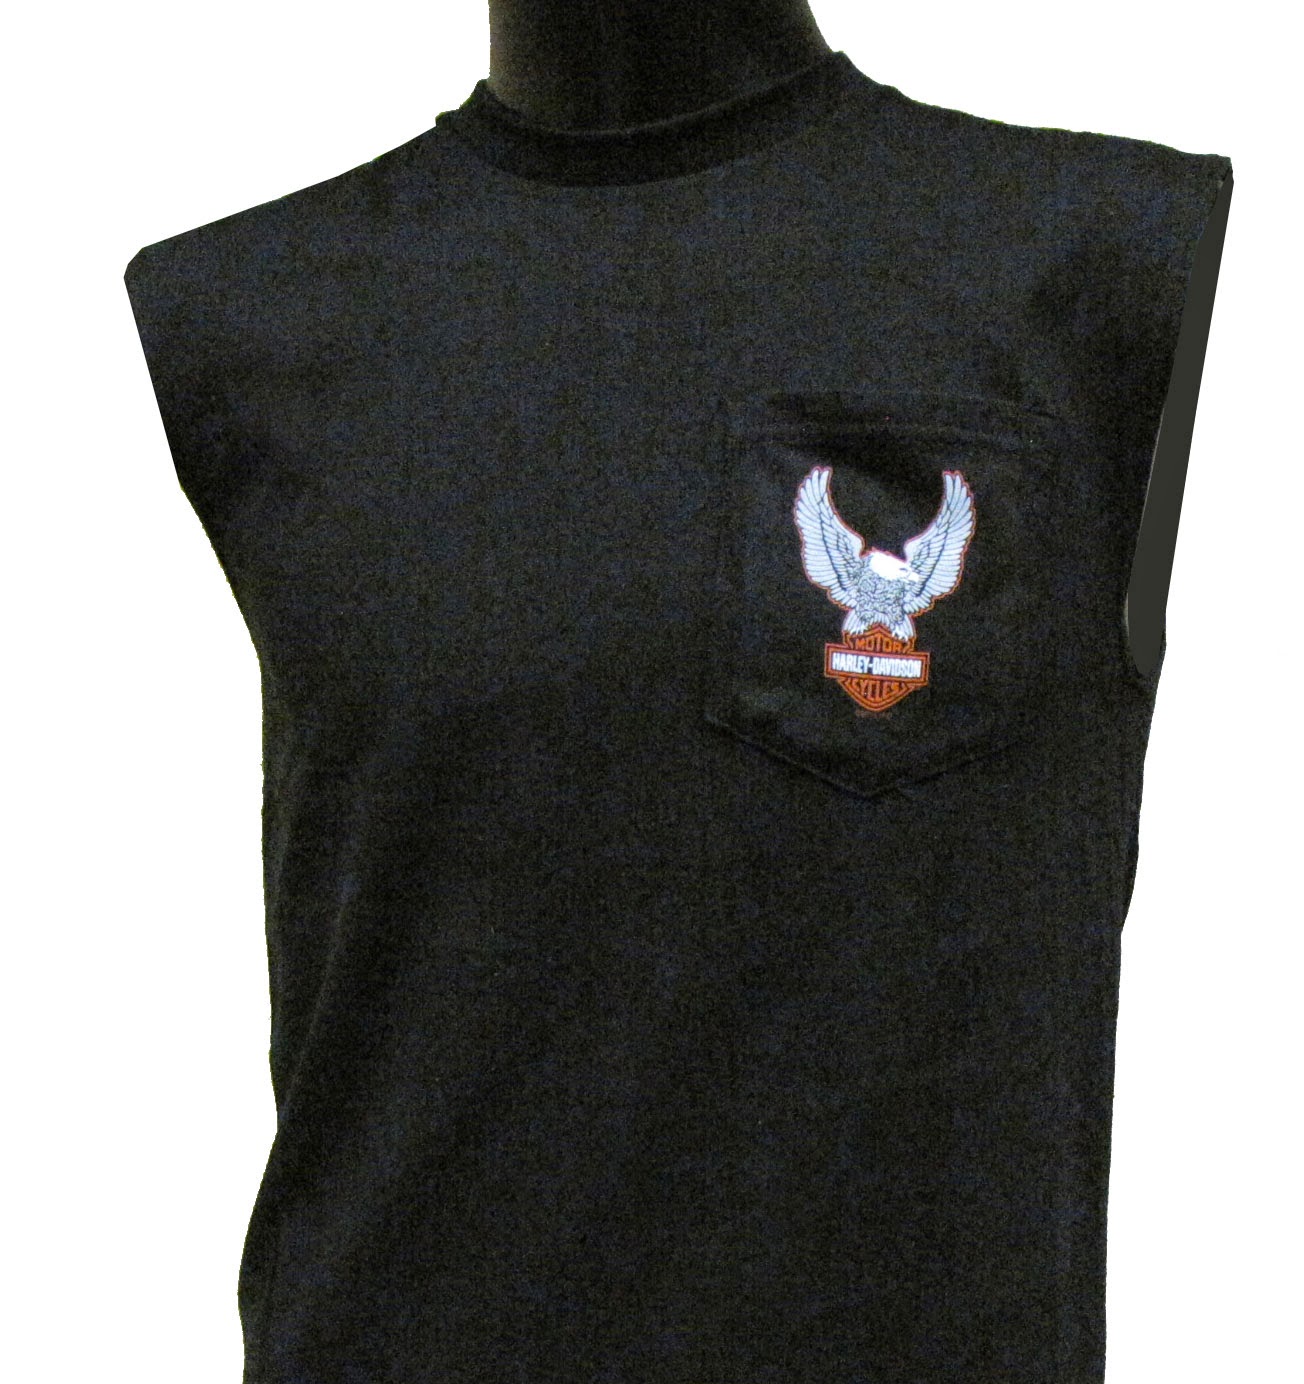 http://www.adventureharley.com/harley-davidson-muscle-shirt-mens-pocket-sleeveless-t-black